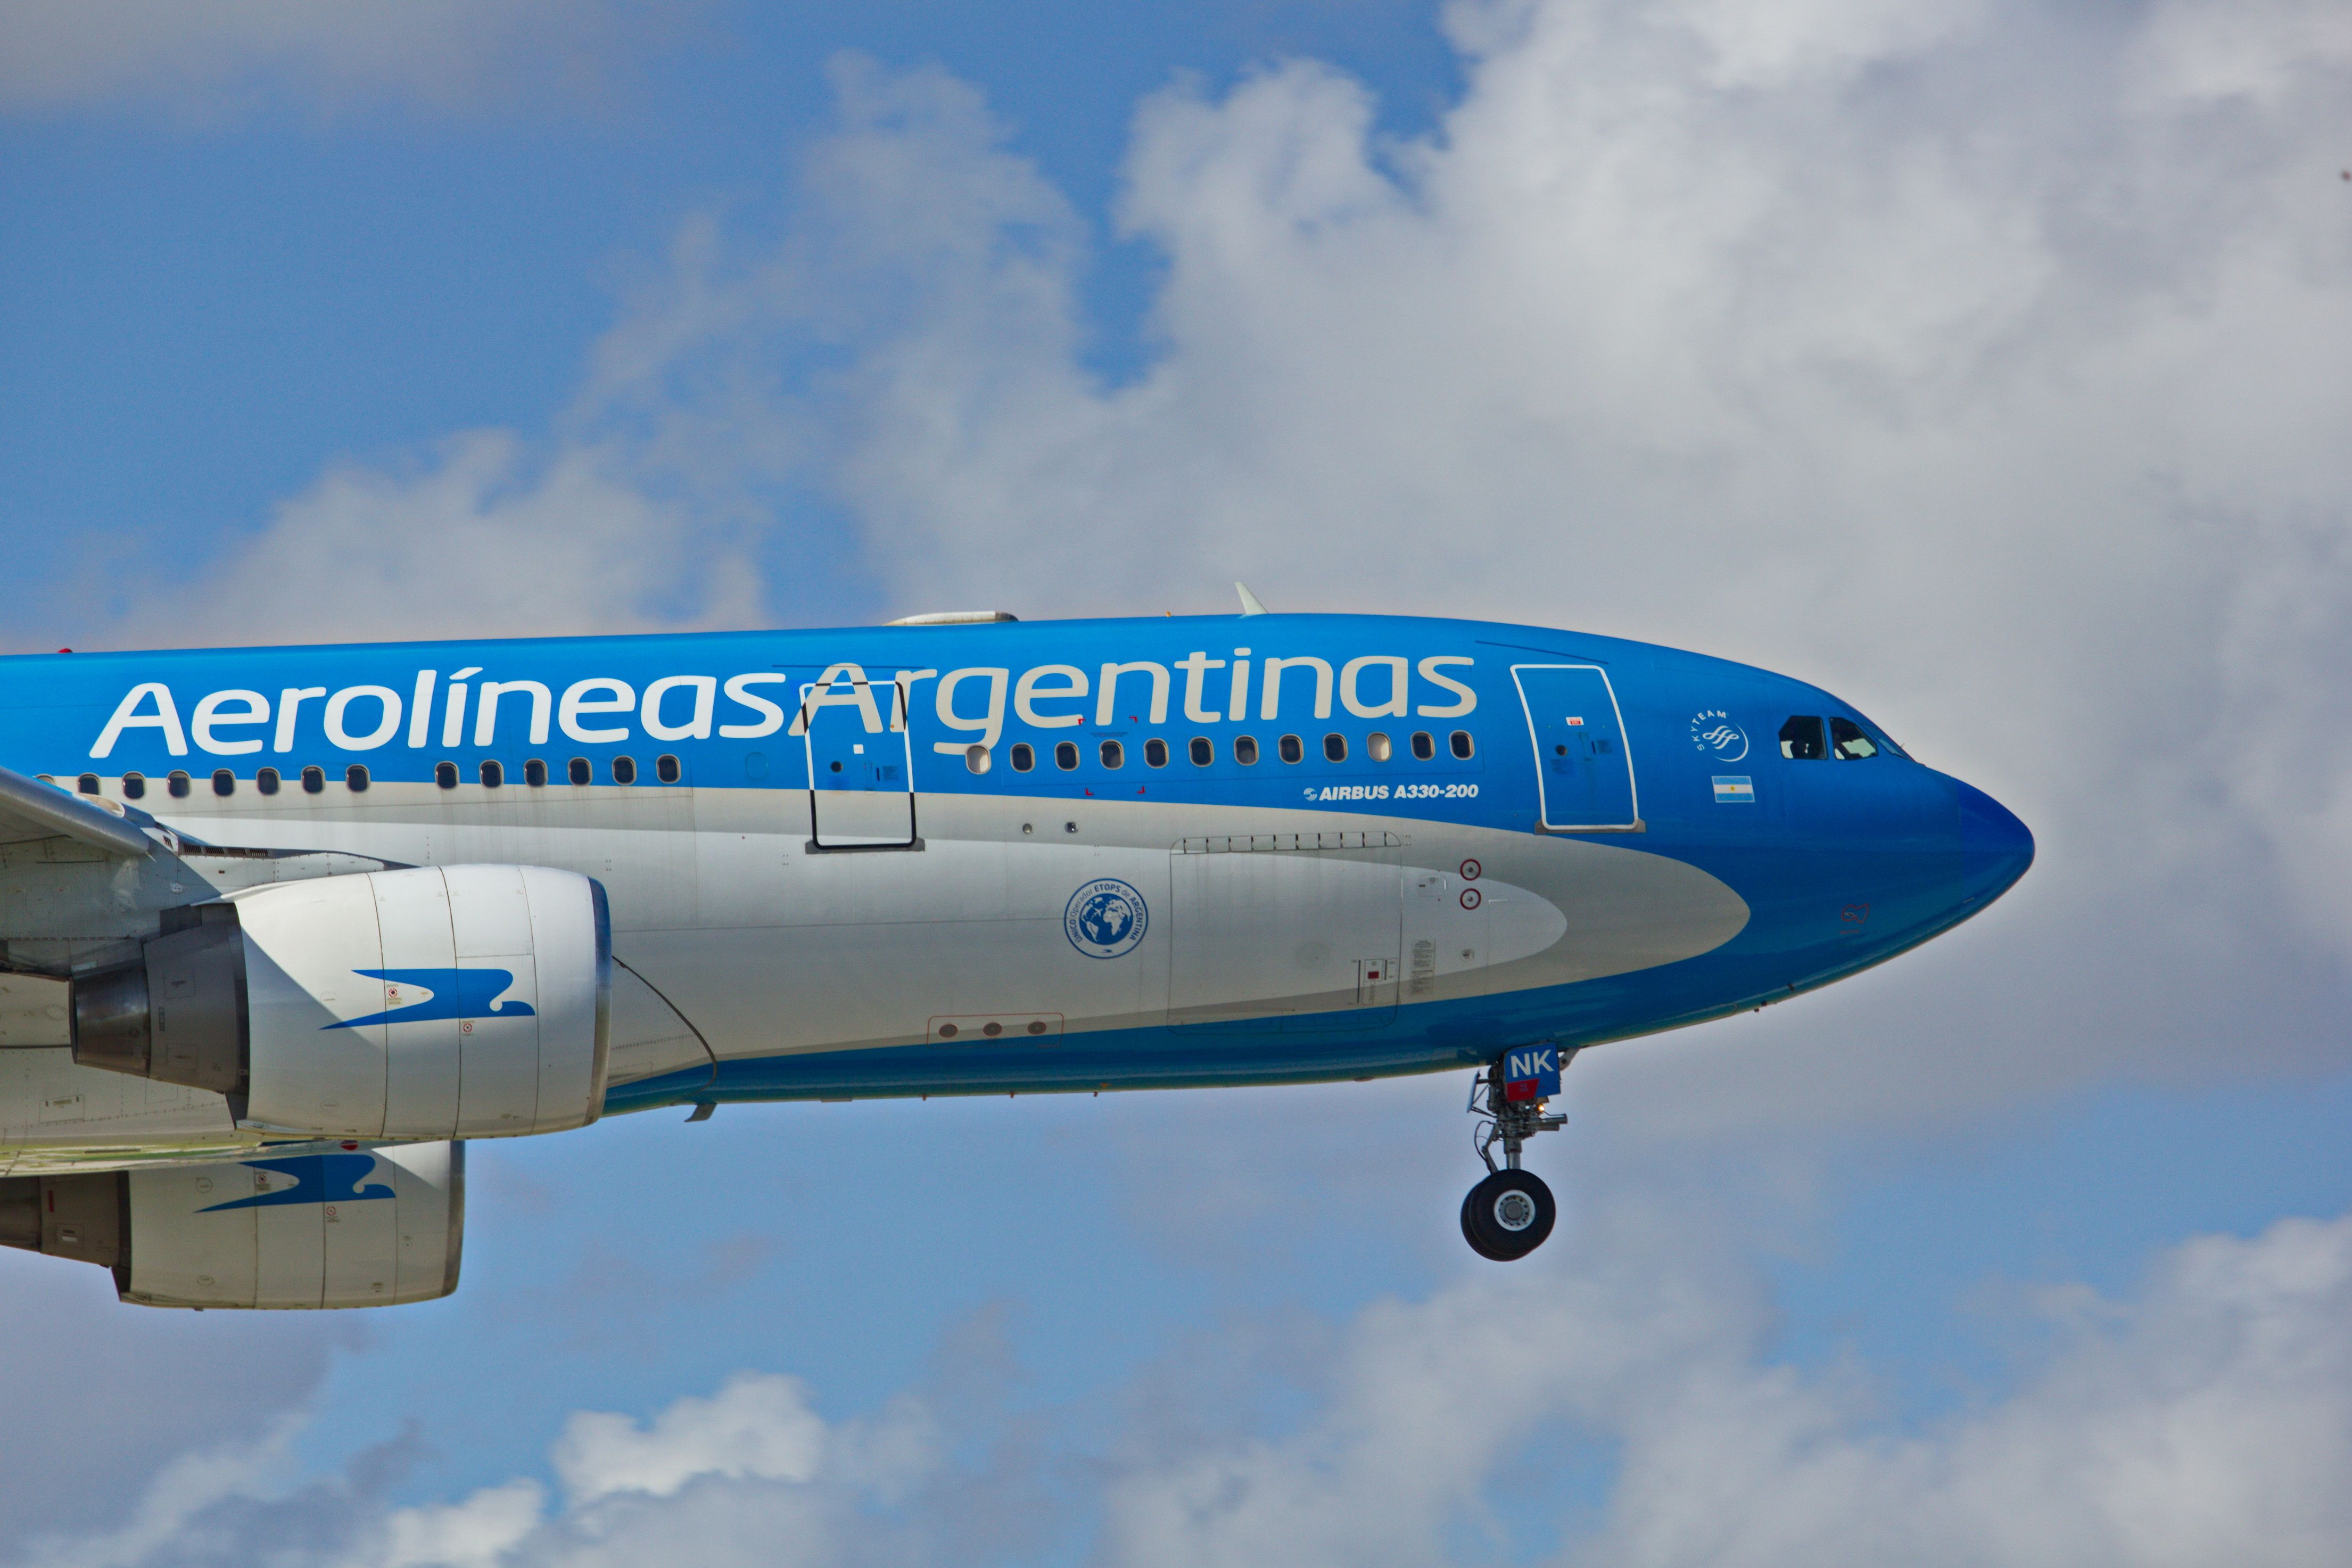 Aerolineas Argentinas Airbus 330 on final at MIA.